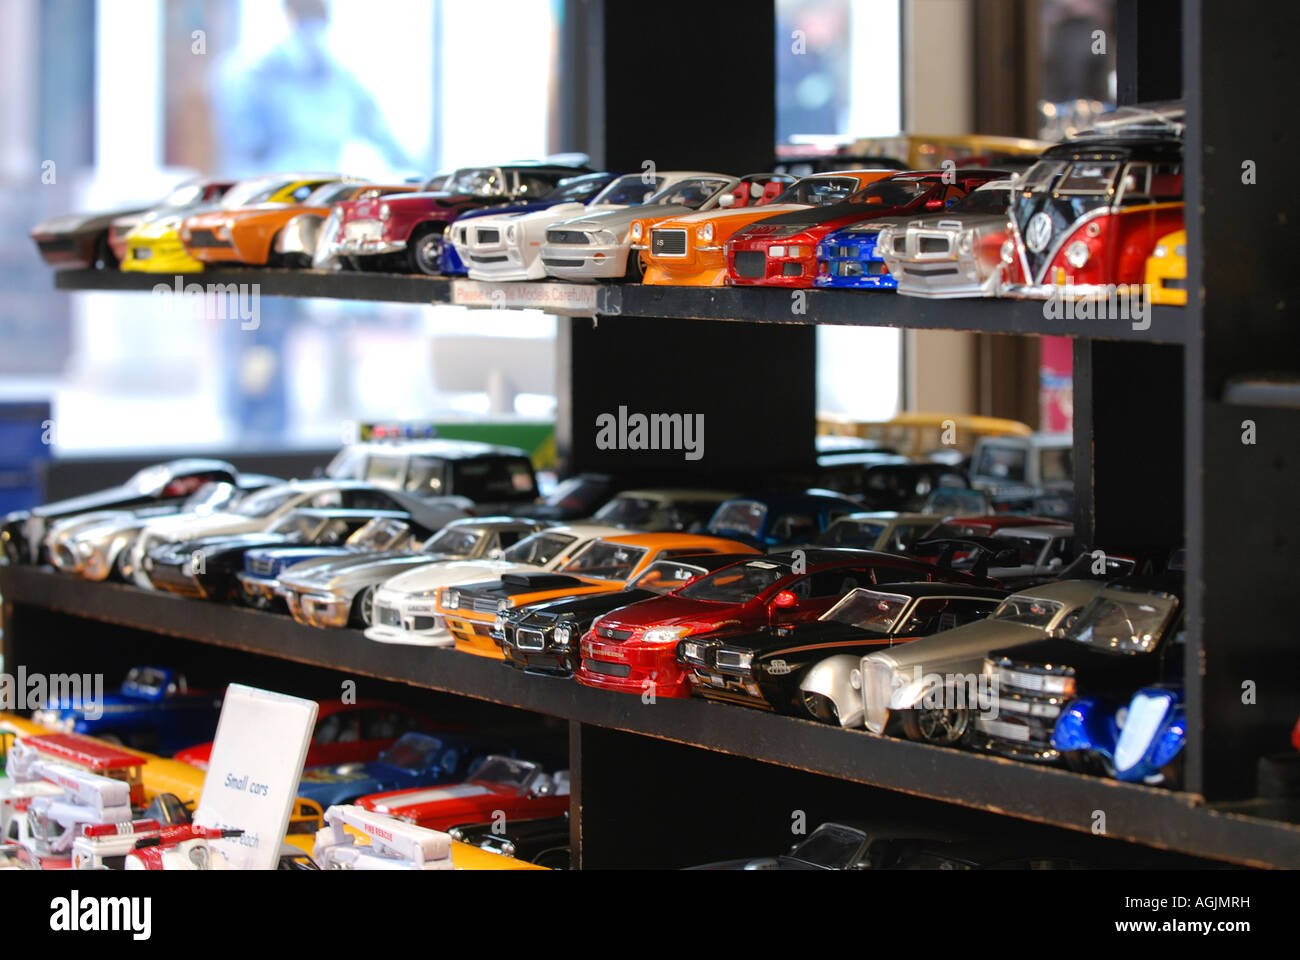 USA Massachusetts Boston a display of toy replica cars Stock Photo